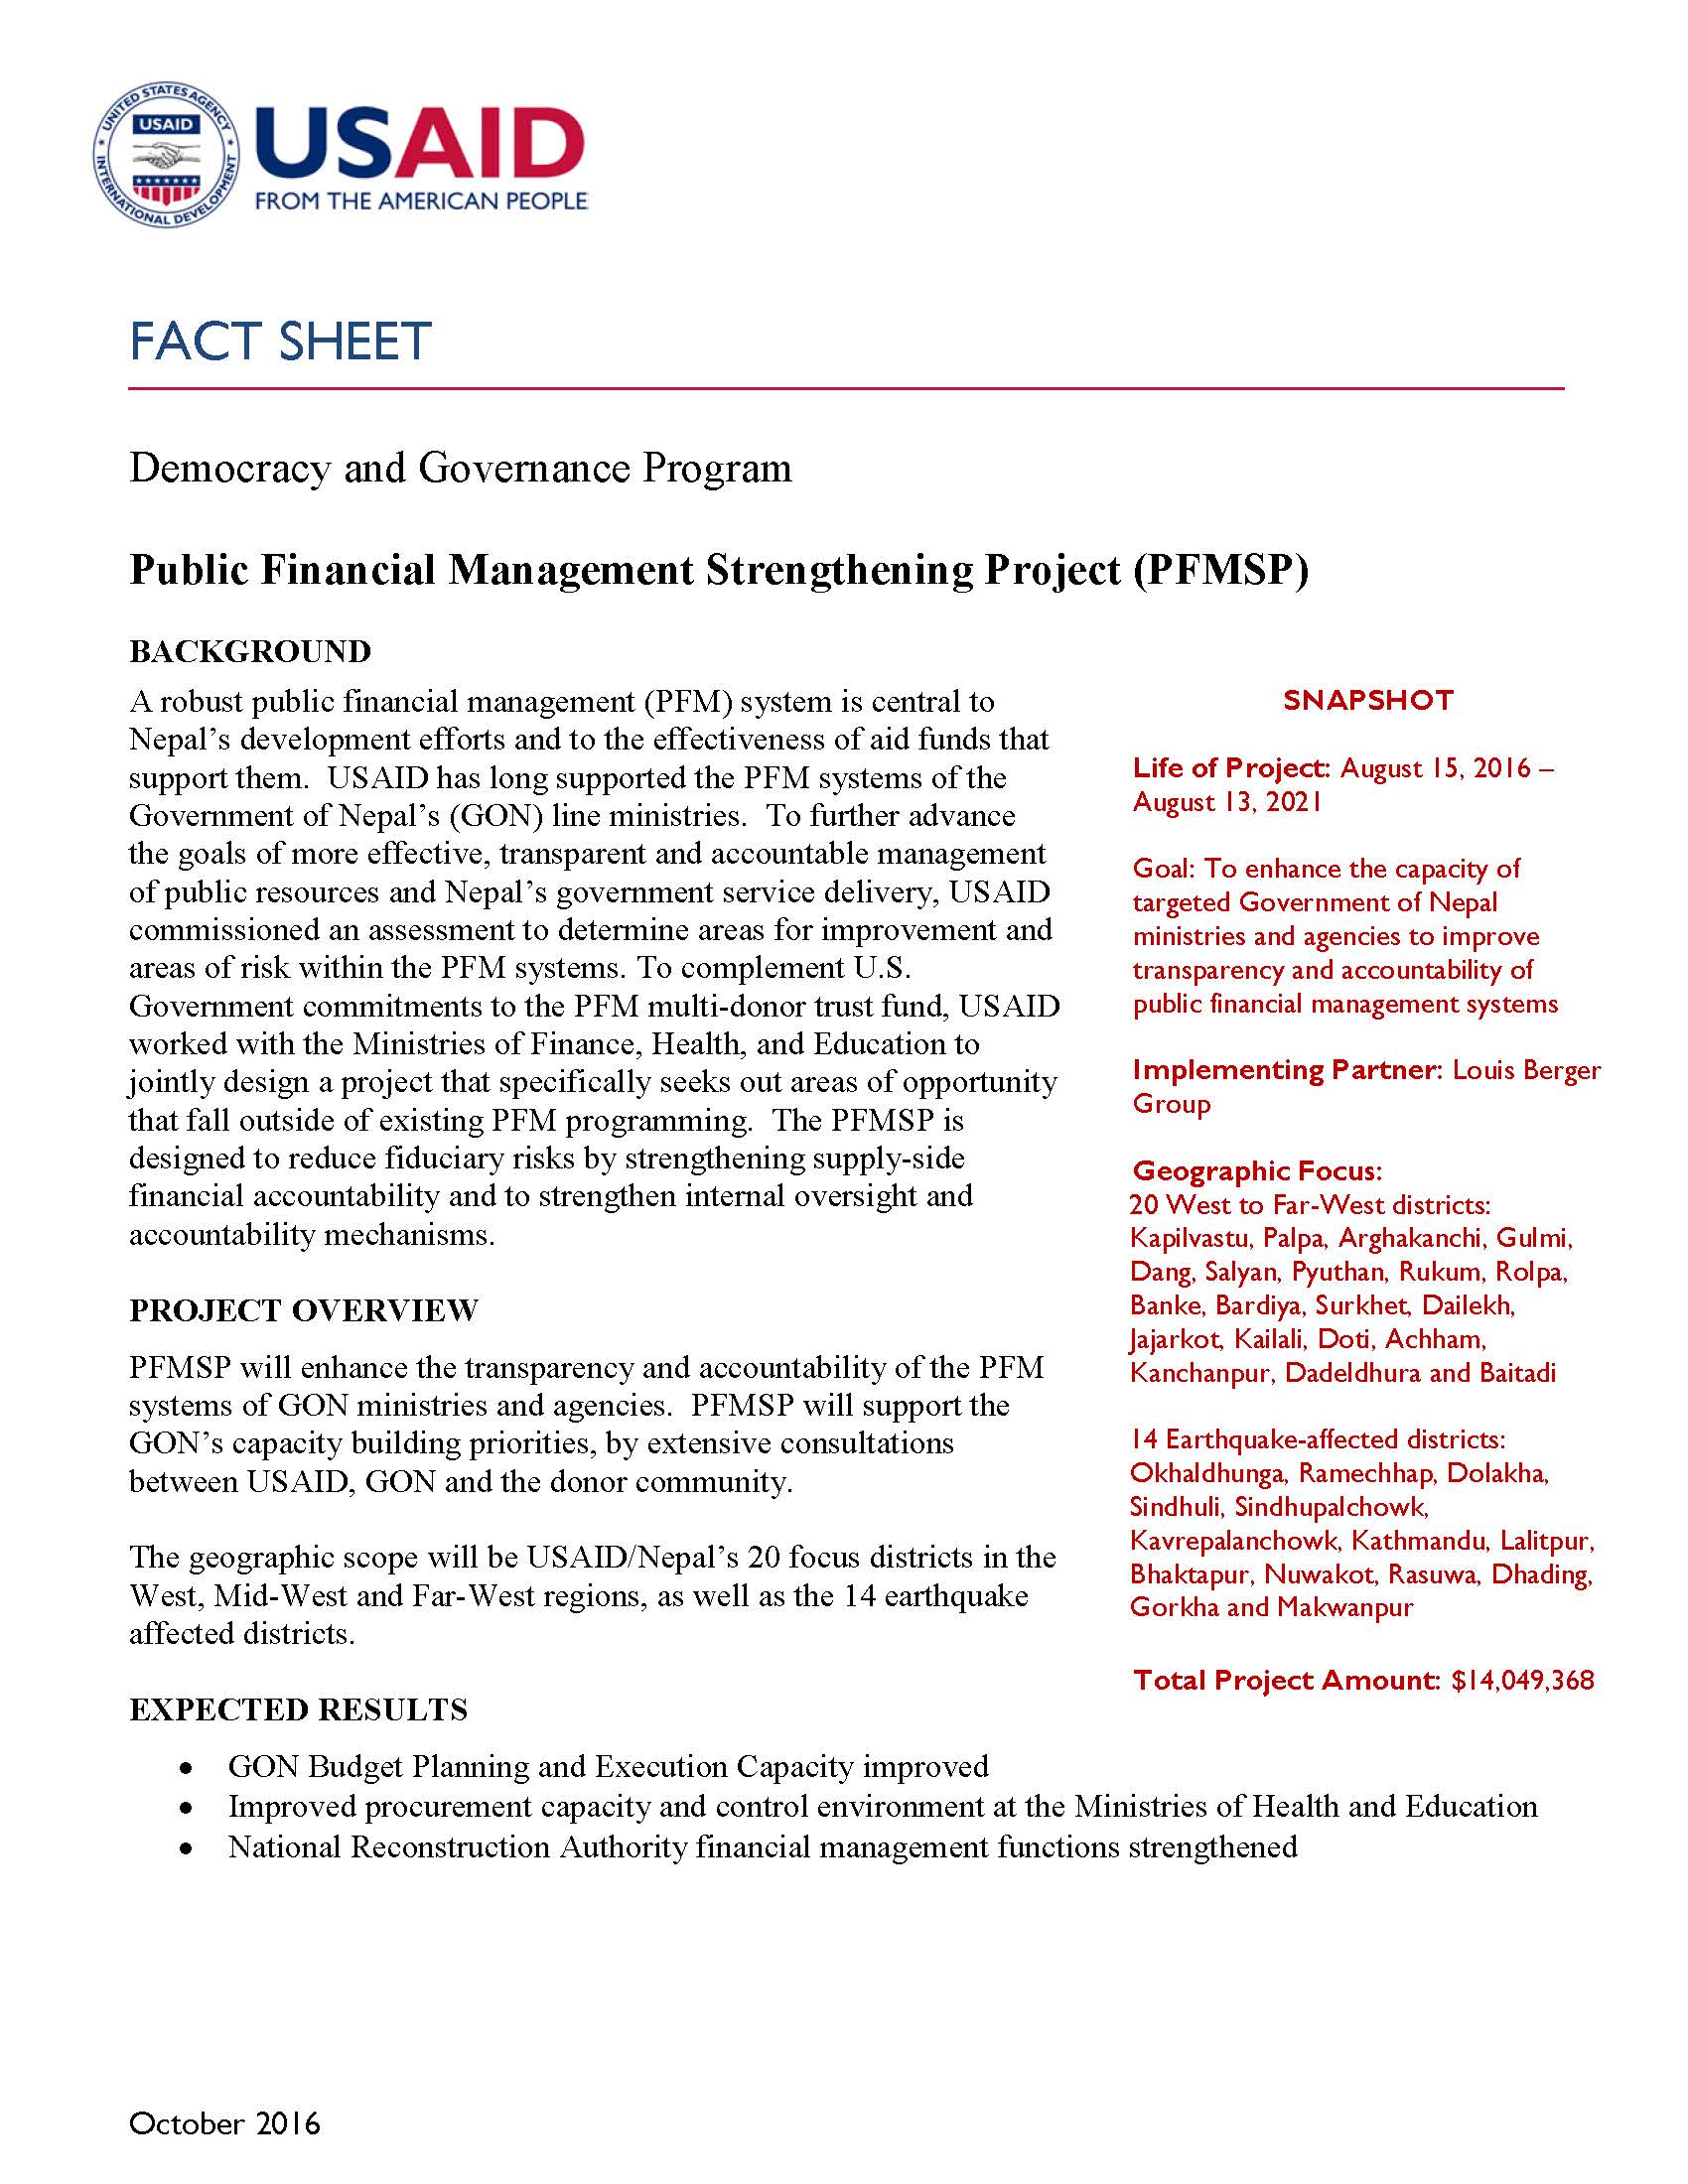 Public Financial Management Strengthening Project